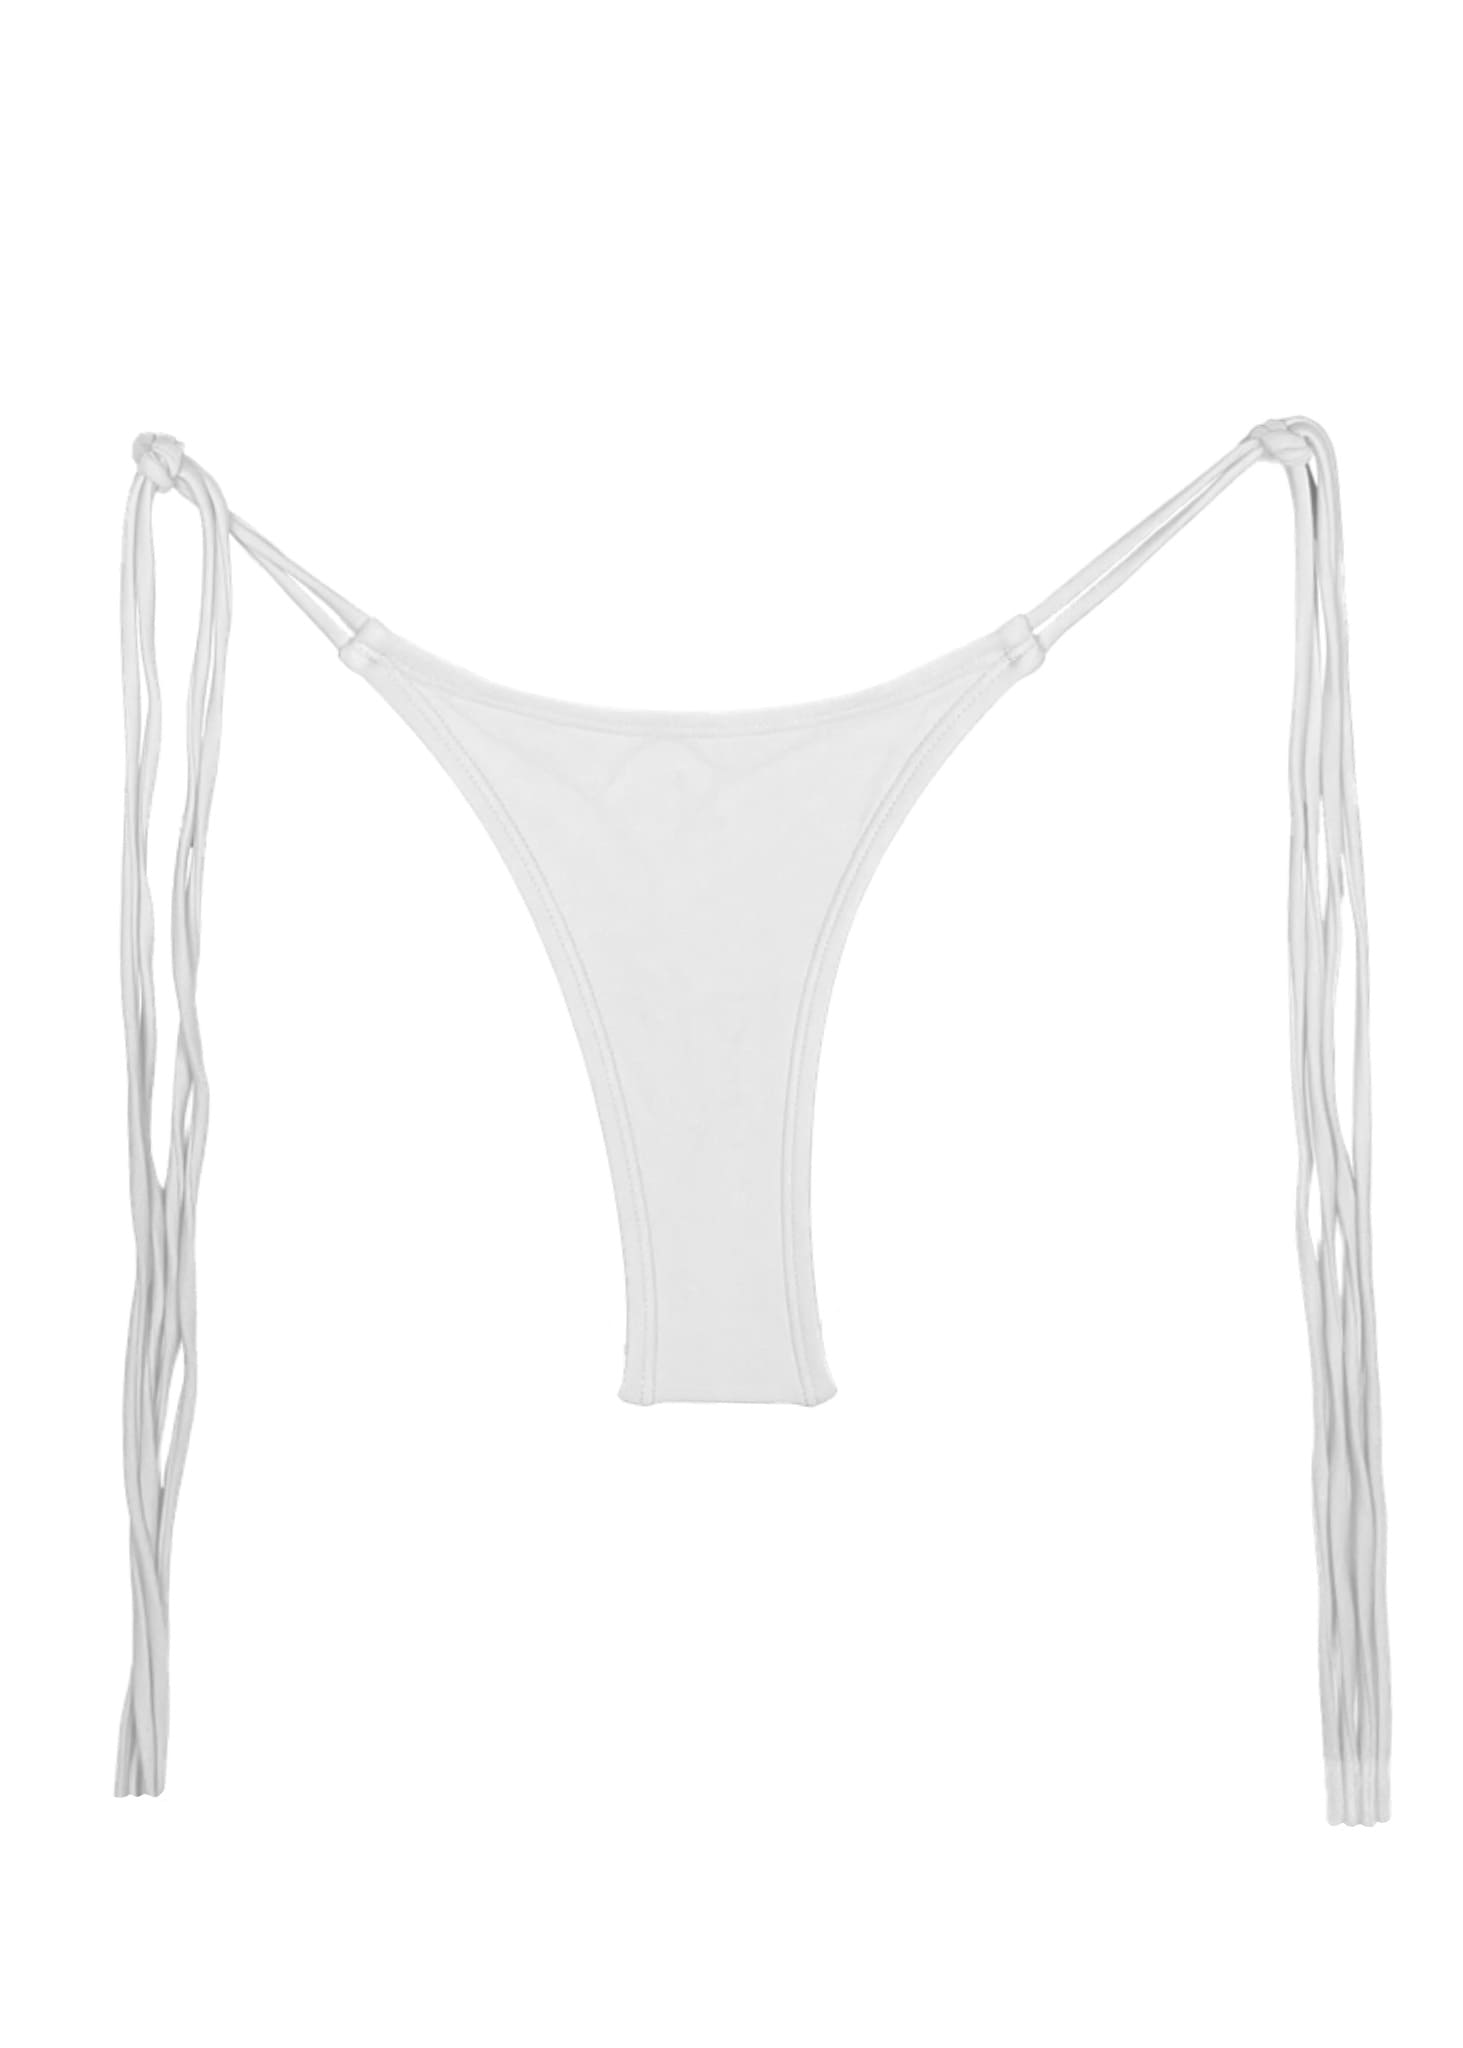 White Bikini Set | White Thong Swimsuits | Tinye Swimwear